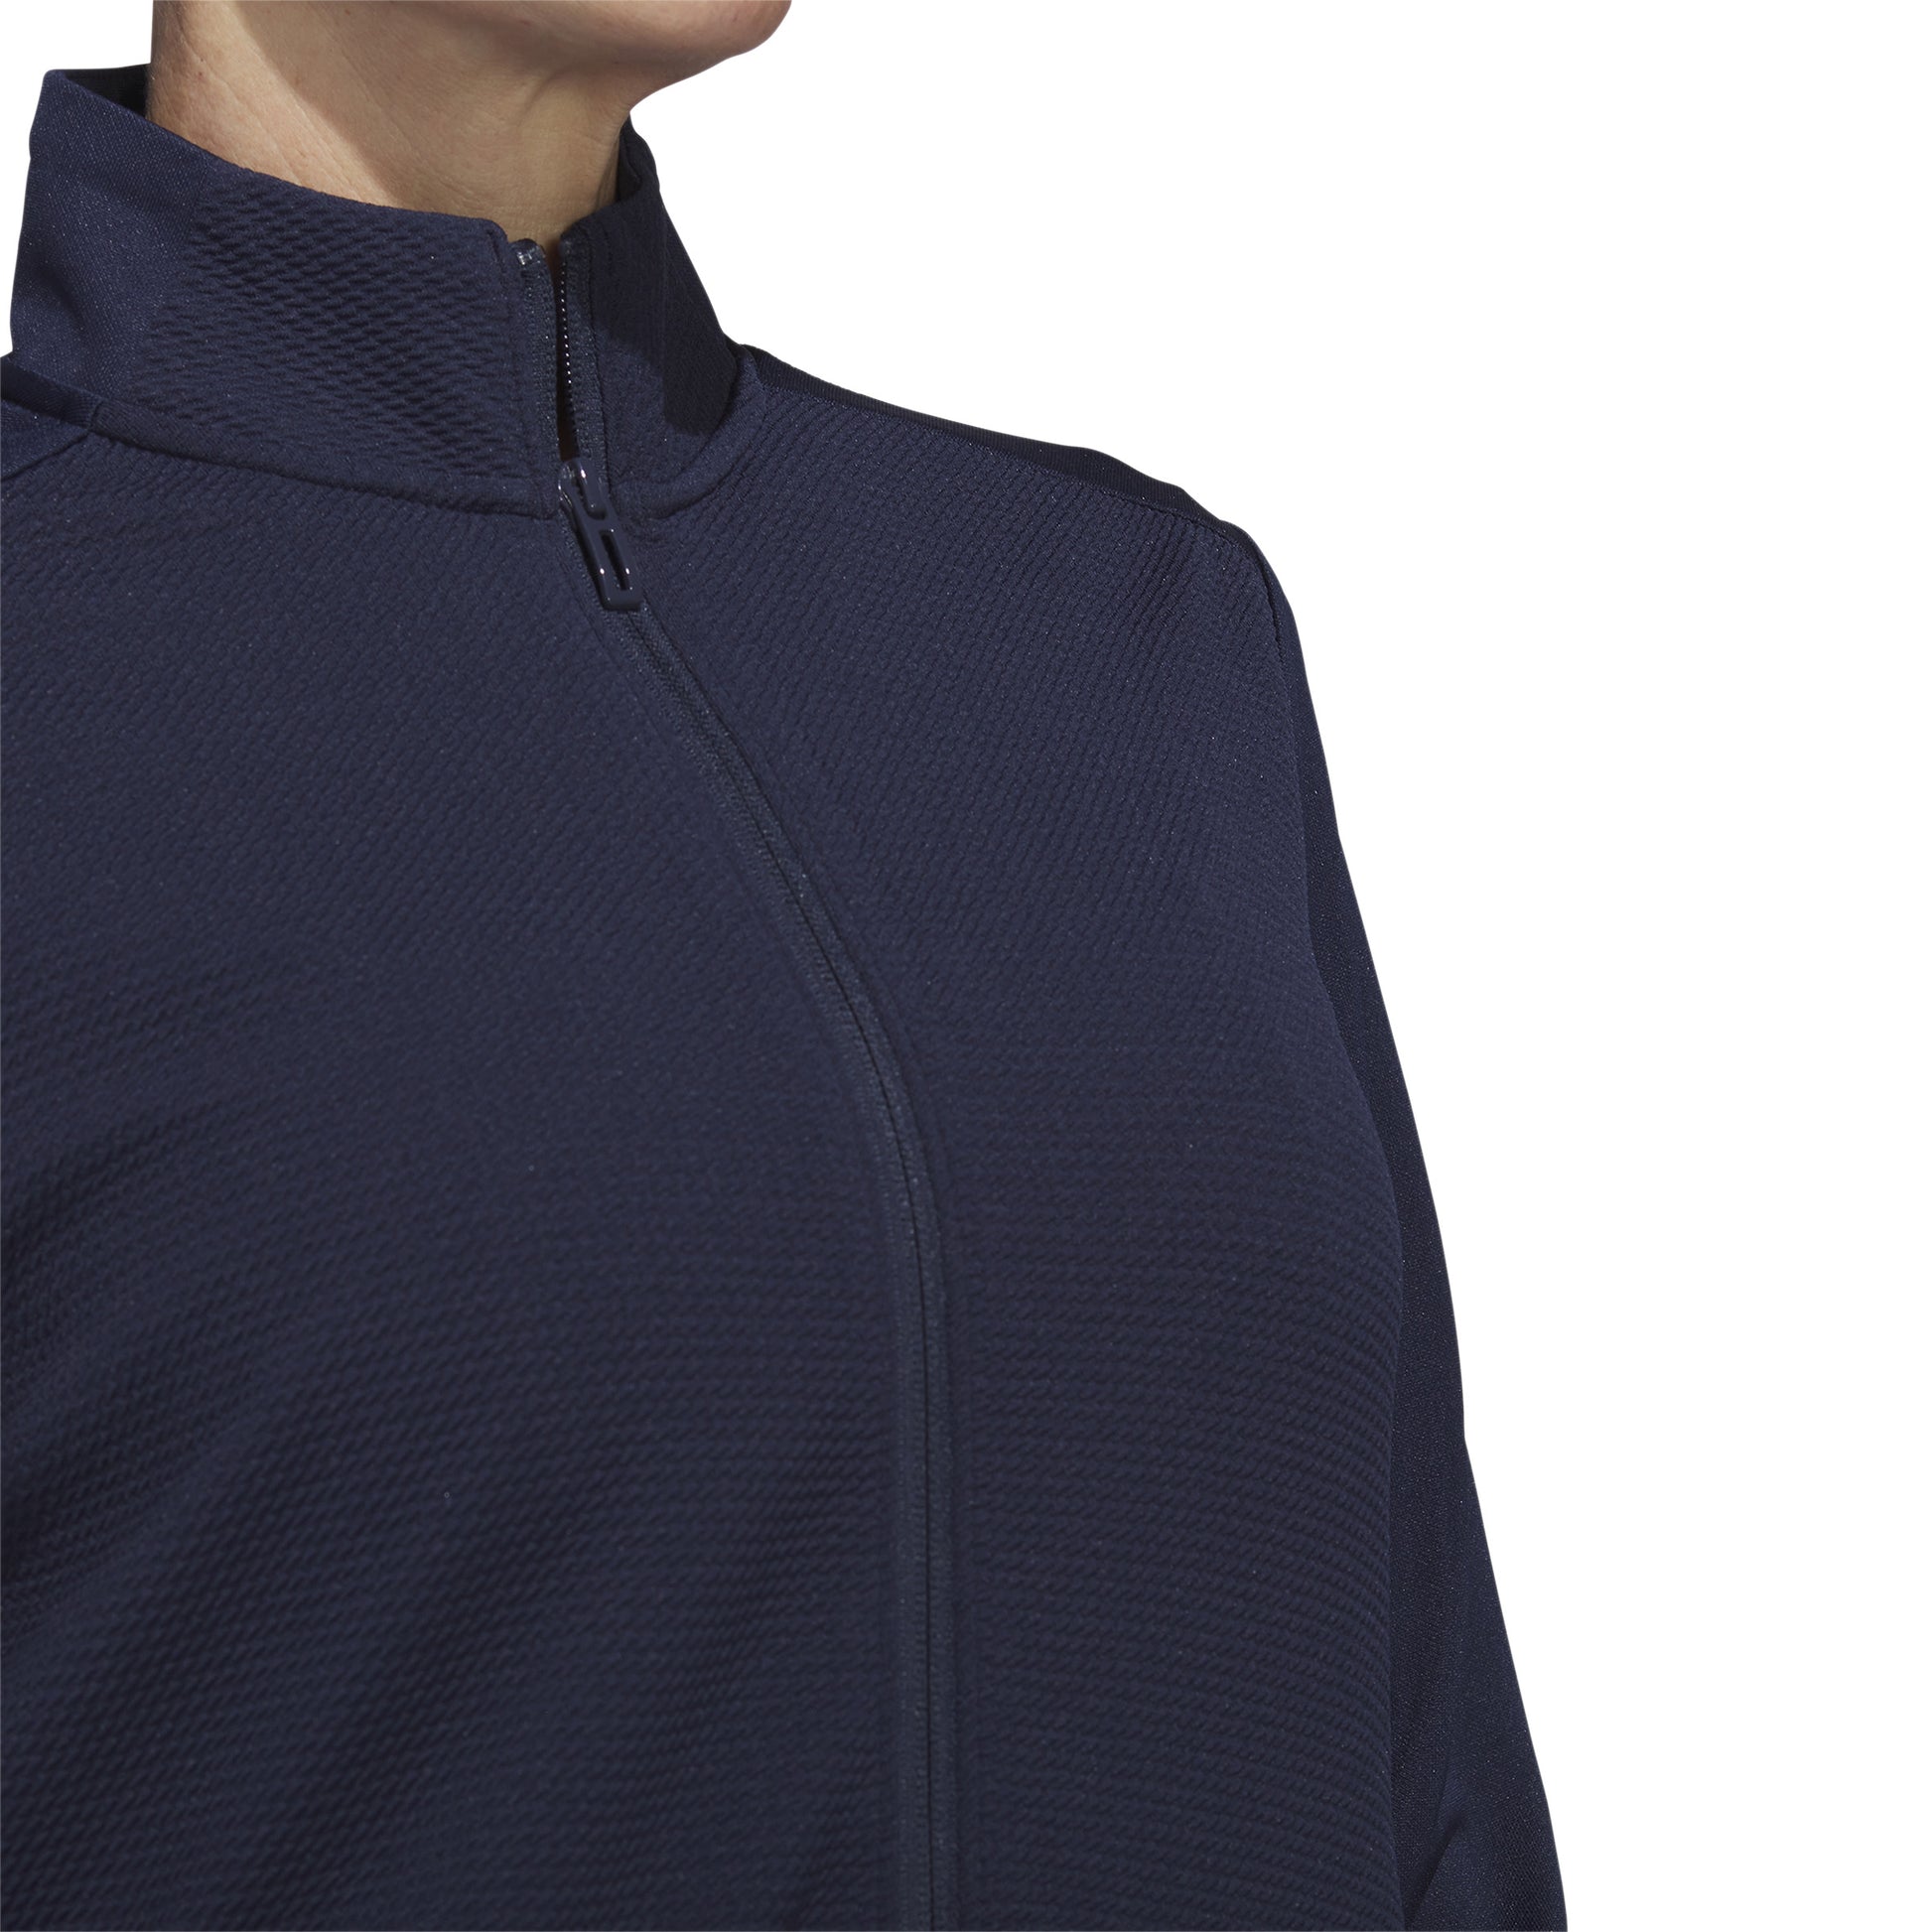 adidas Ladies Lightweight Textured Jersey Jacket in Collegiate Navy